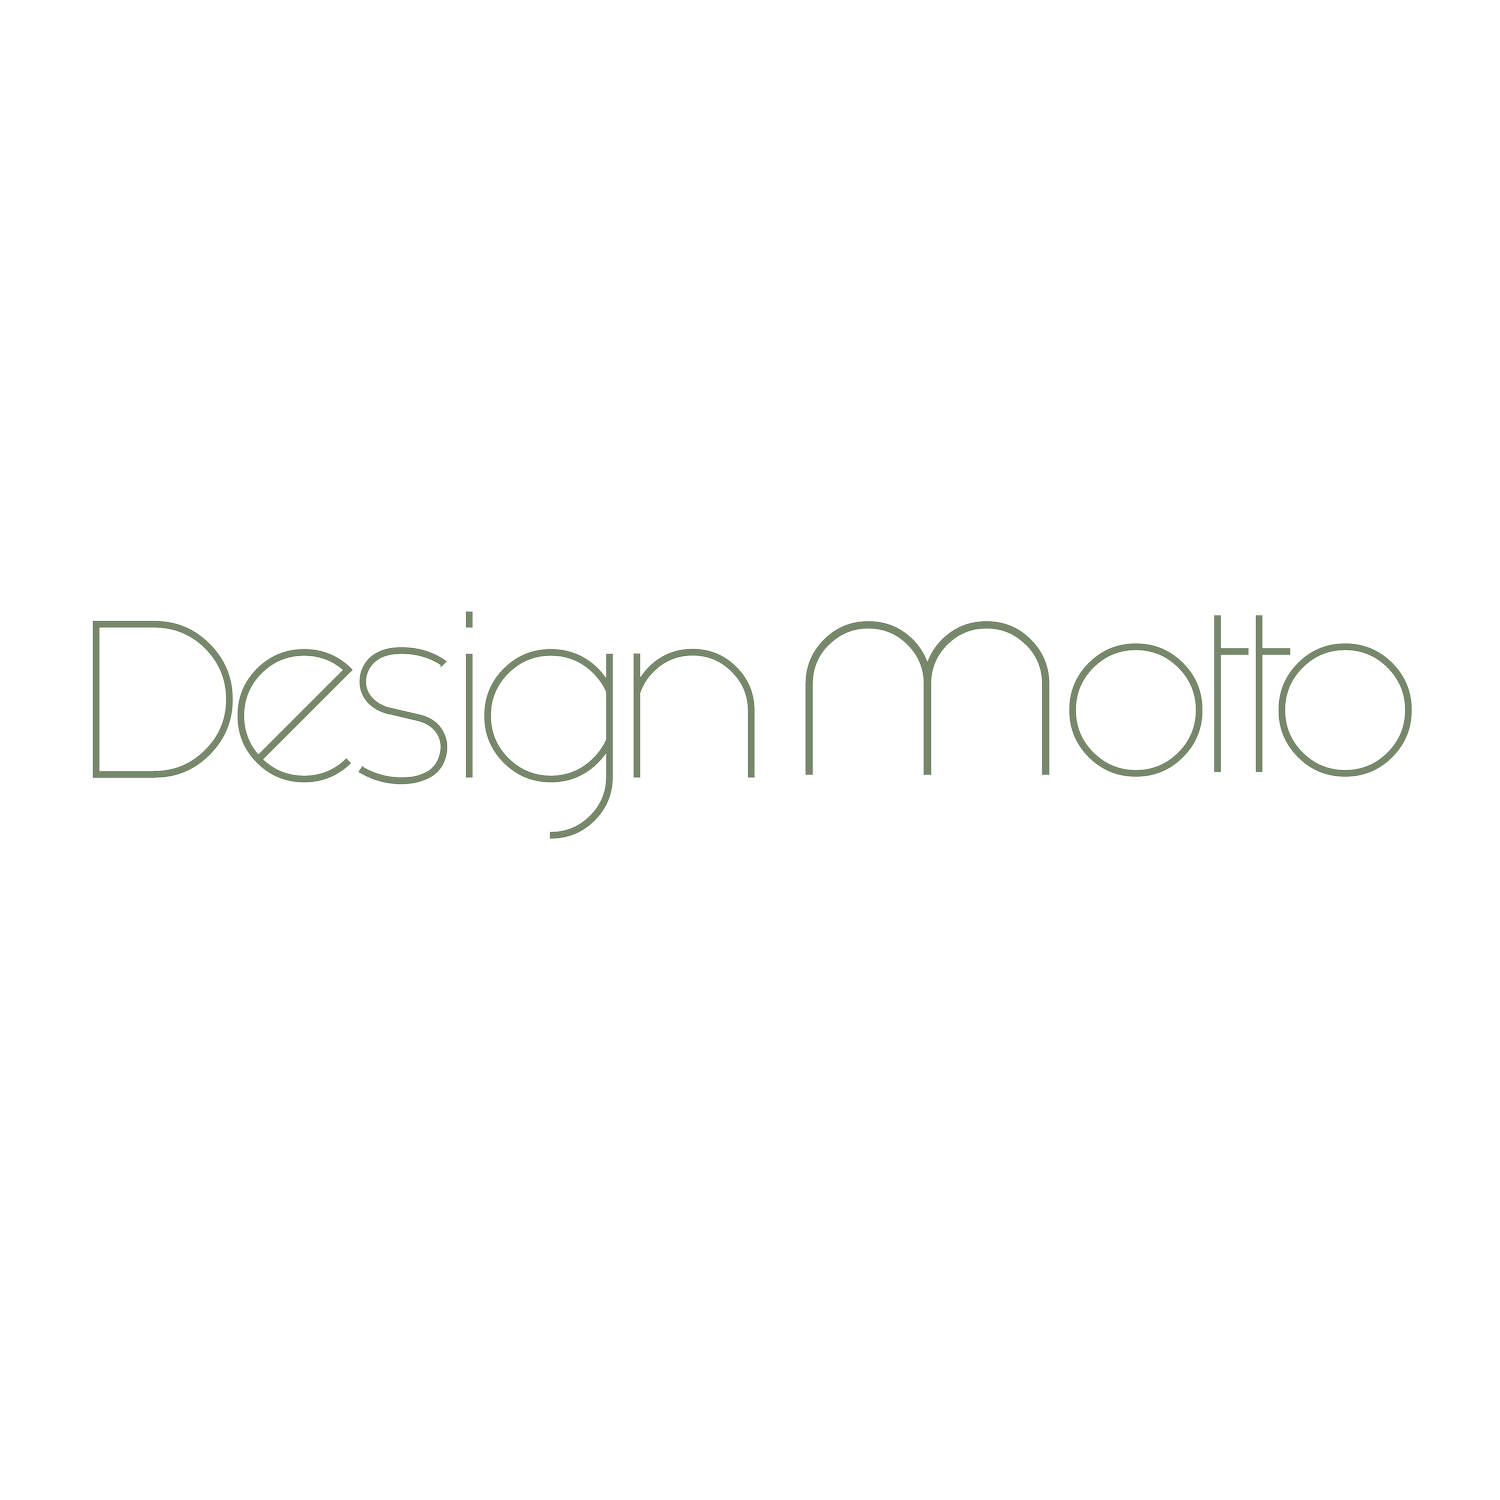 design motto 